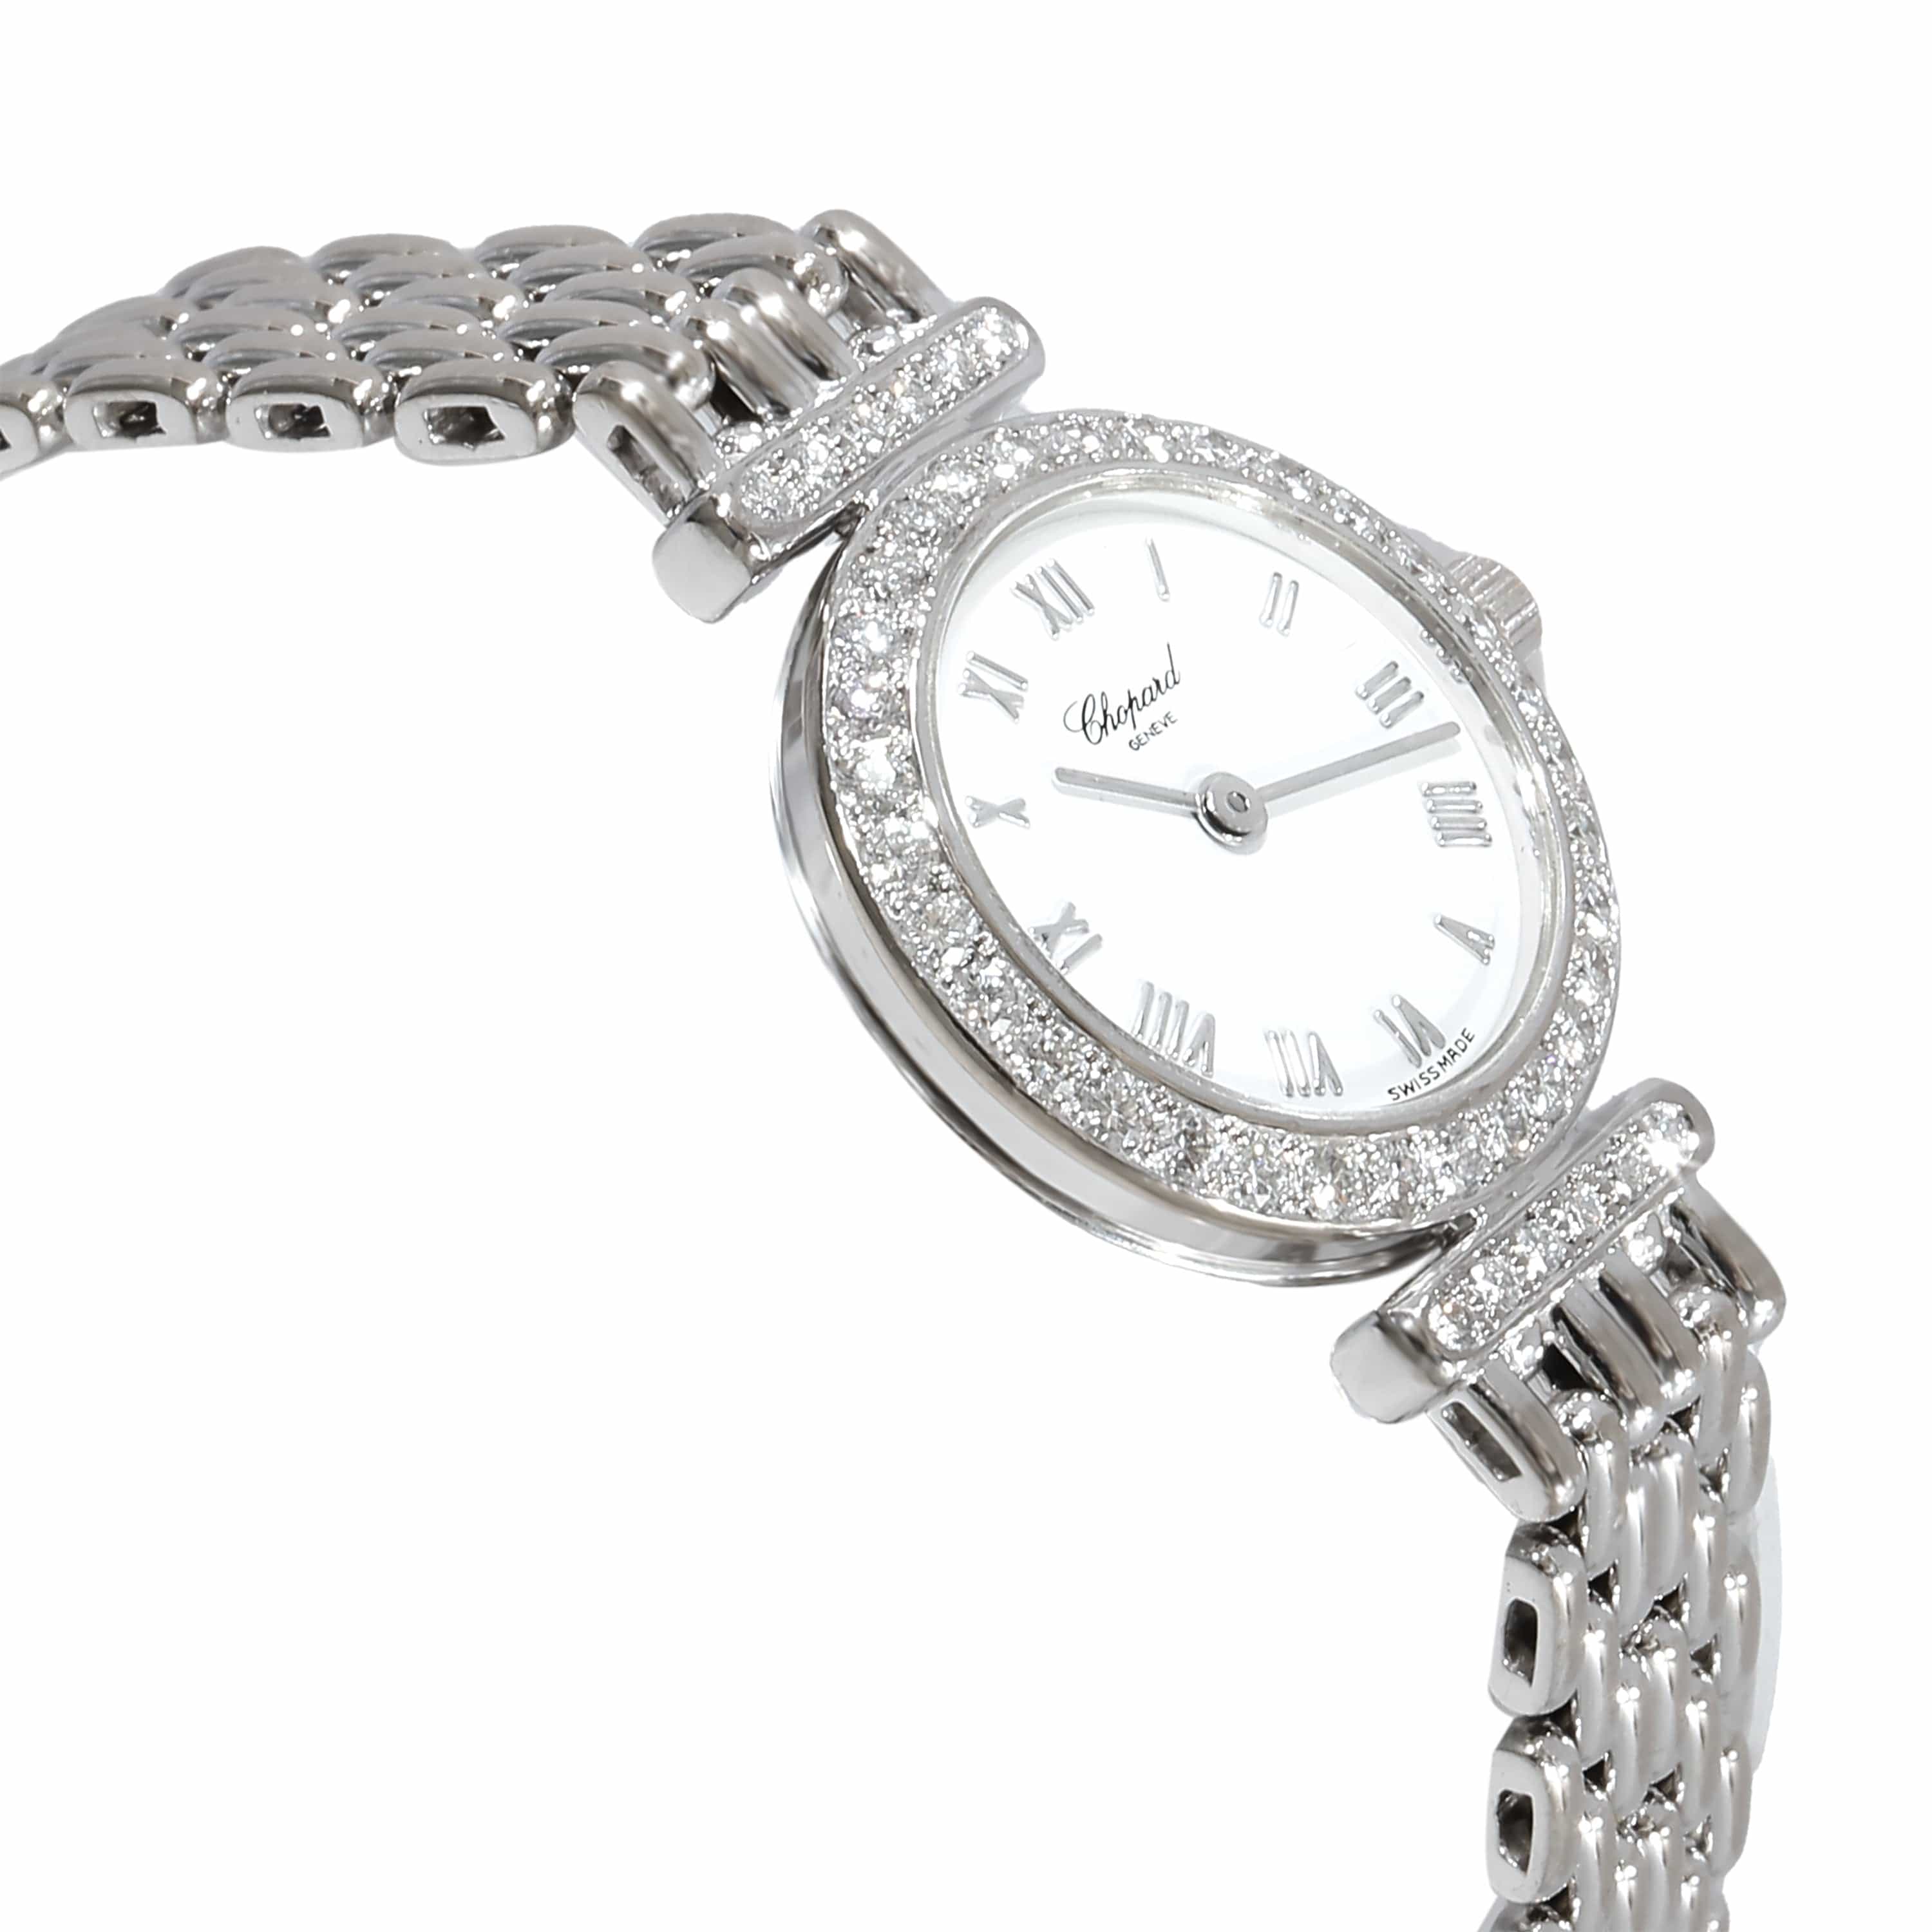 Chopard Chopard Classic 105895-1001 Women's Watch in 18kt White Gold